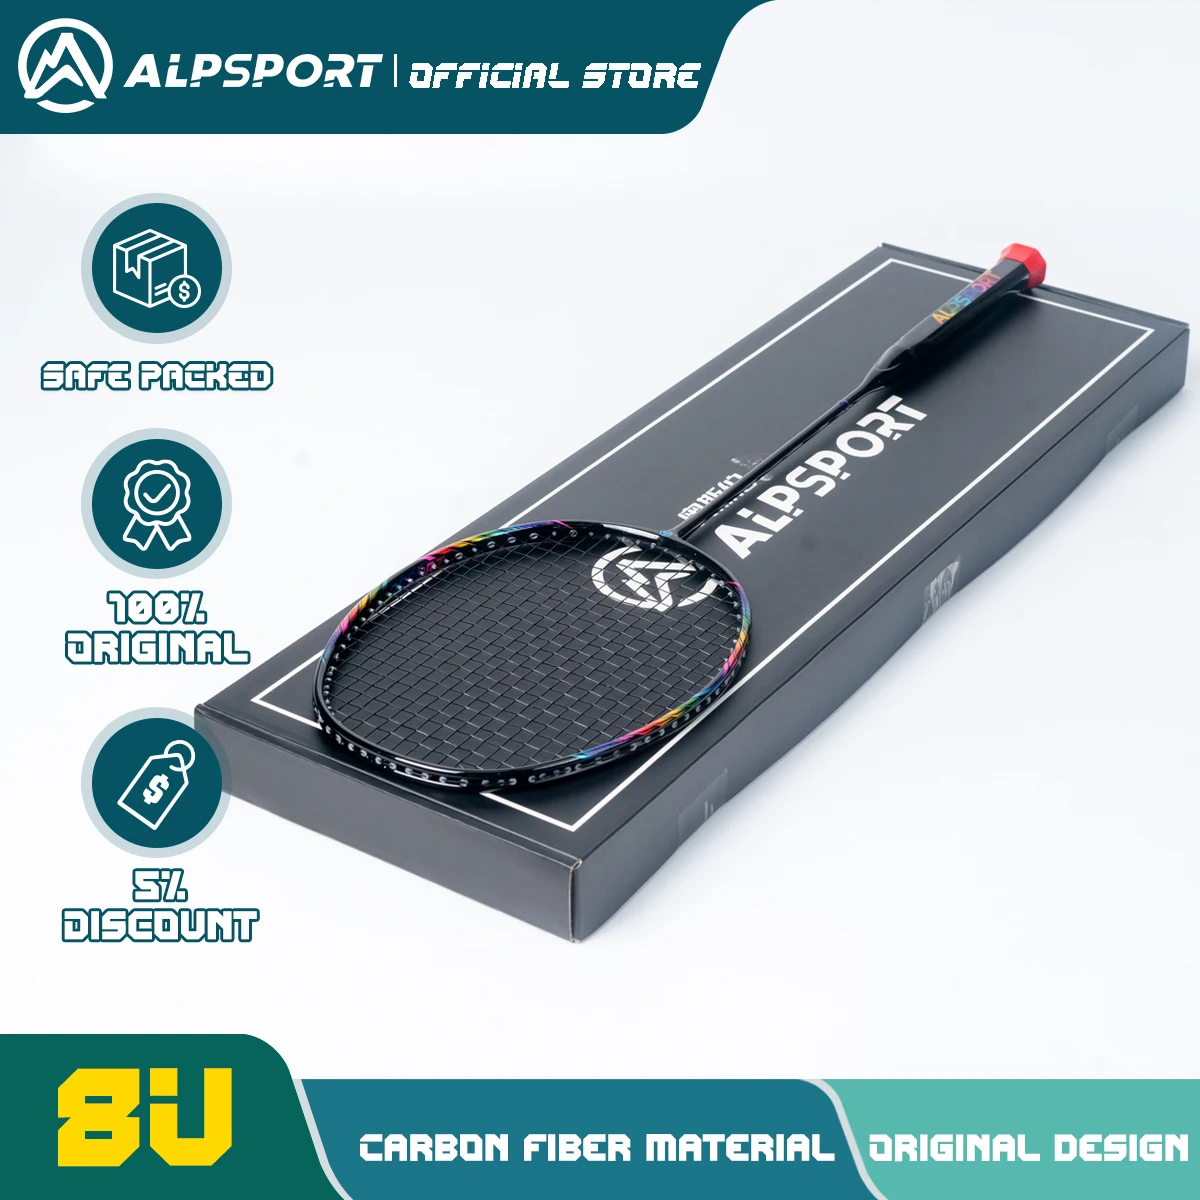 

ALP BBQ2.0 8U G5 65g Super Light Original Design 100% Full Carbon Fiber Raket Professional Badminton Racket With Free String Bag